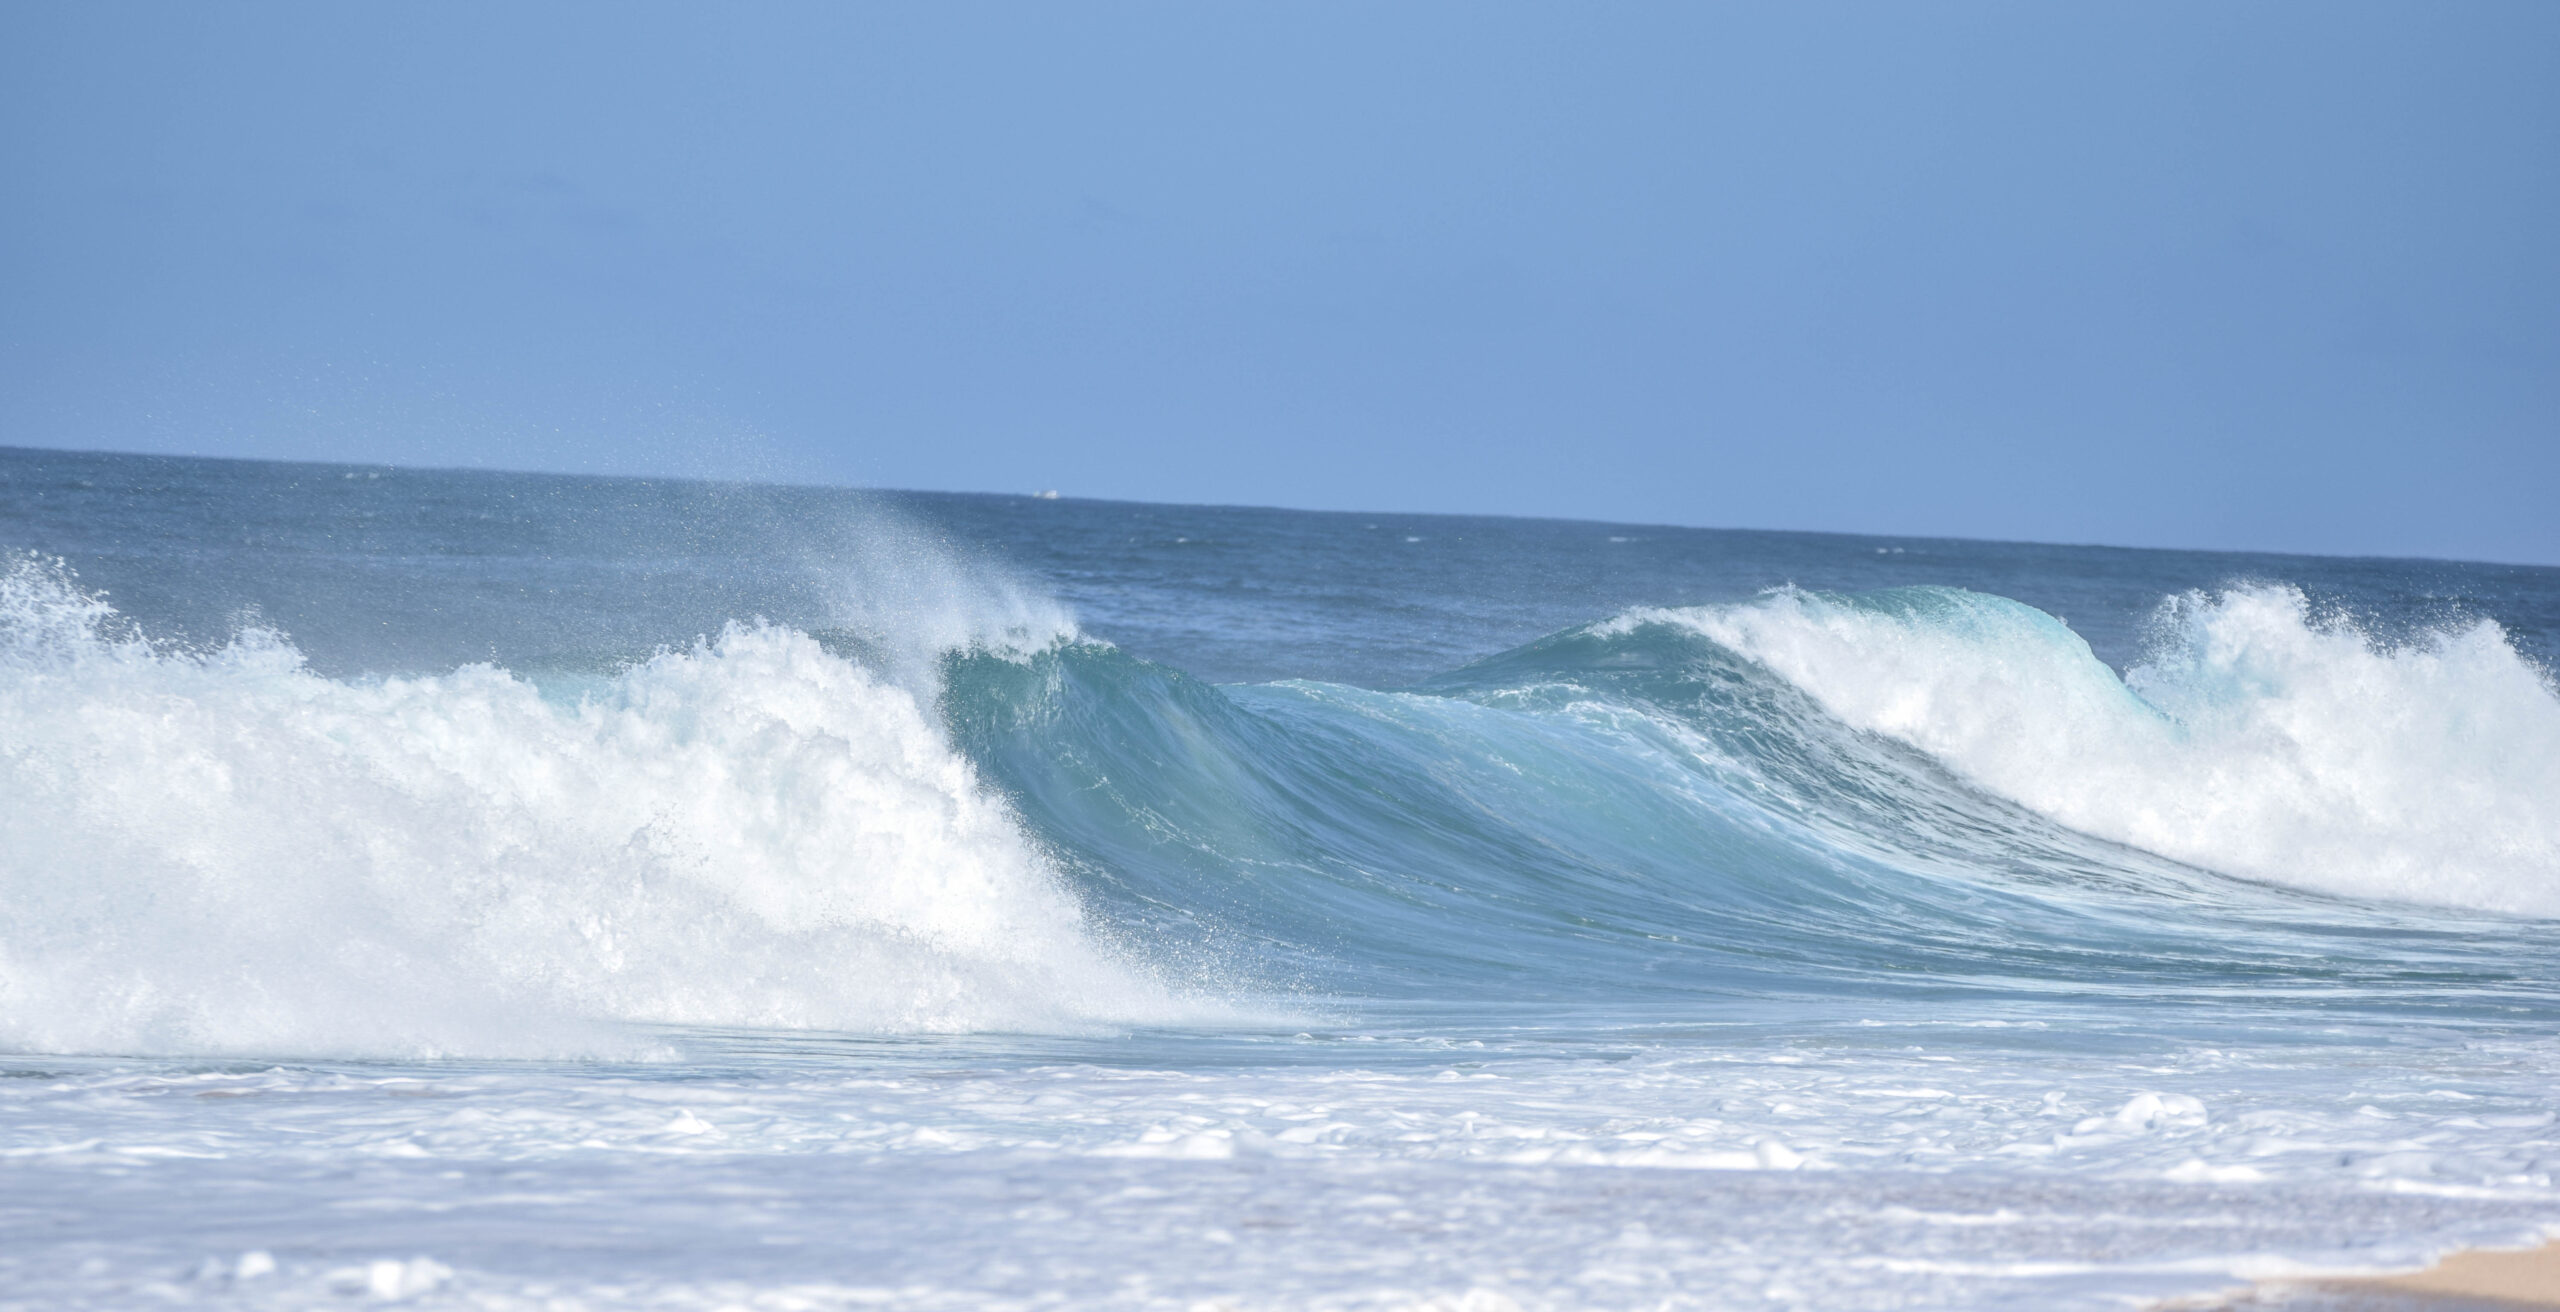 Big wave surfing - Banzai Pipeline - North Shore Oahu